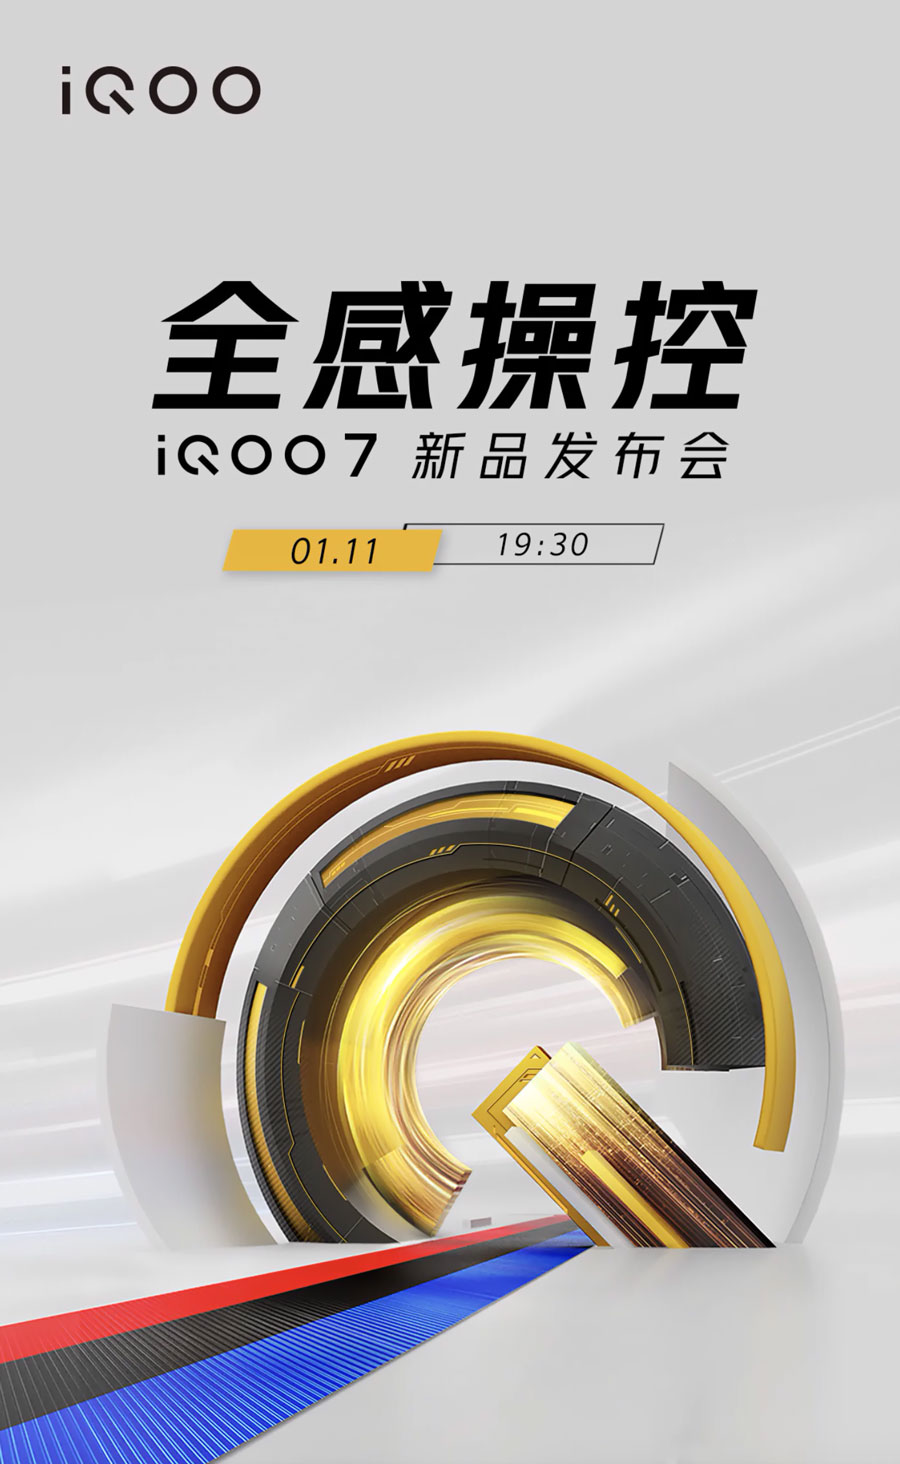 iQOO 7将在1月11日中国发布